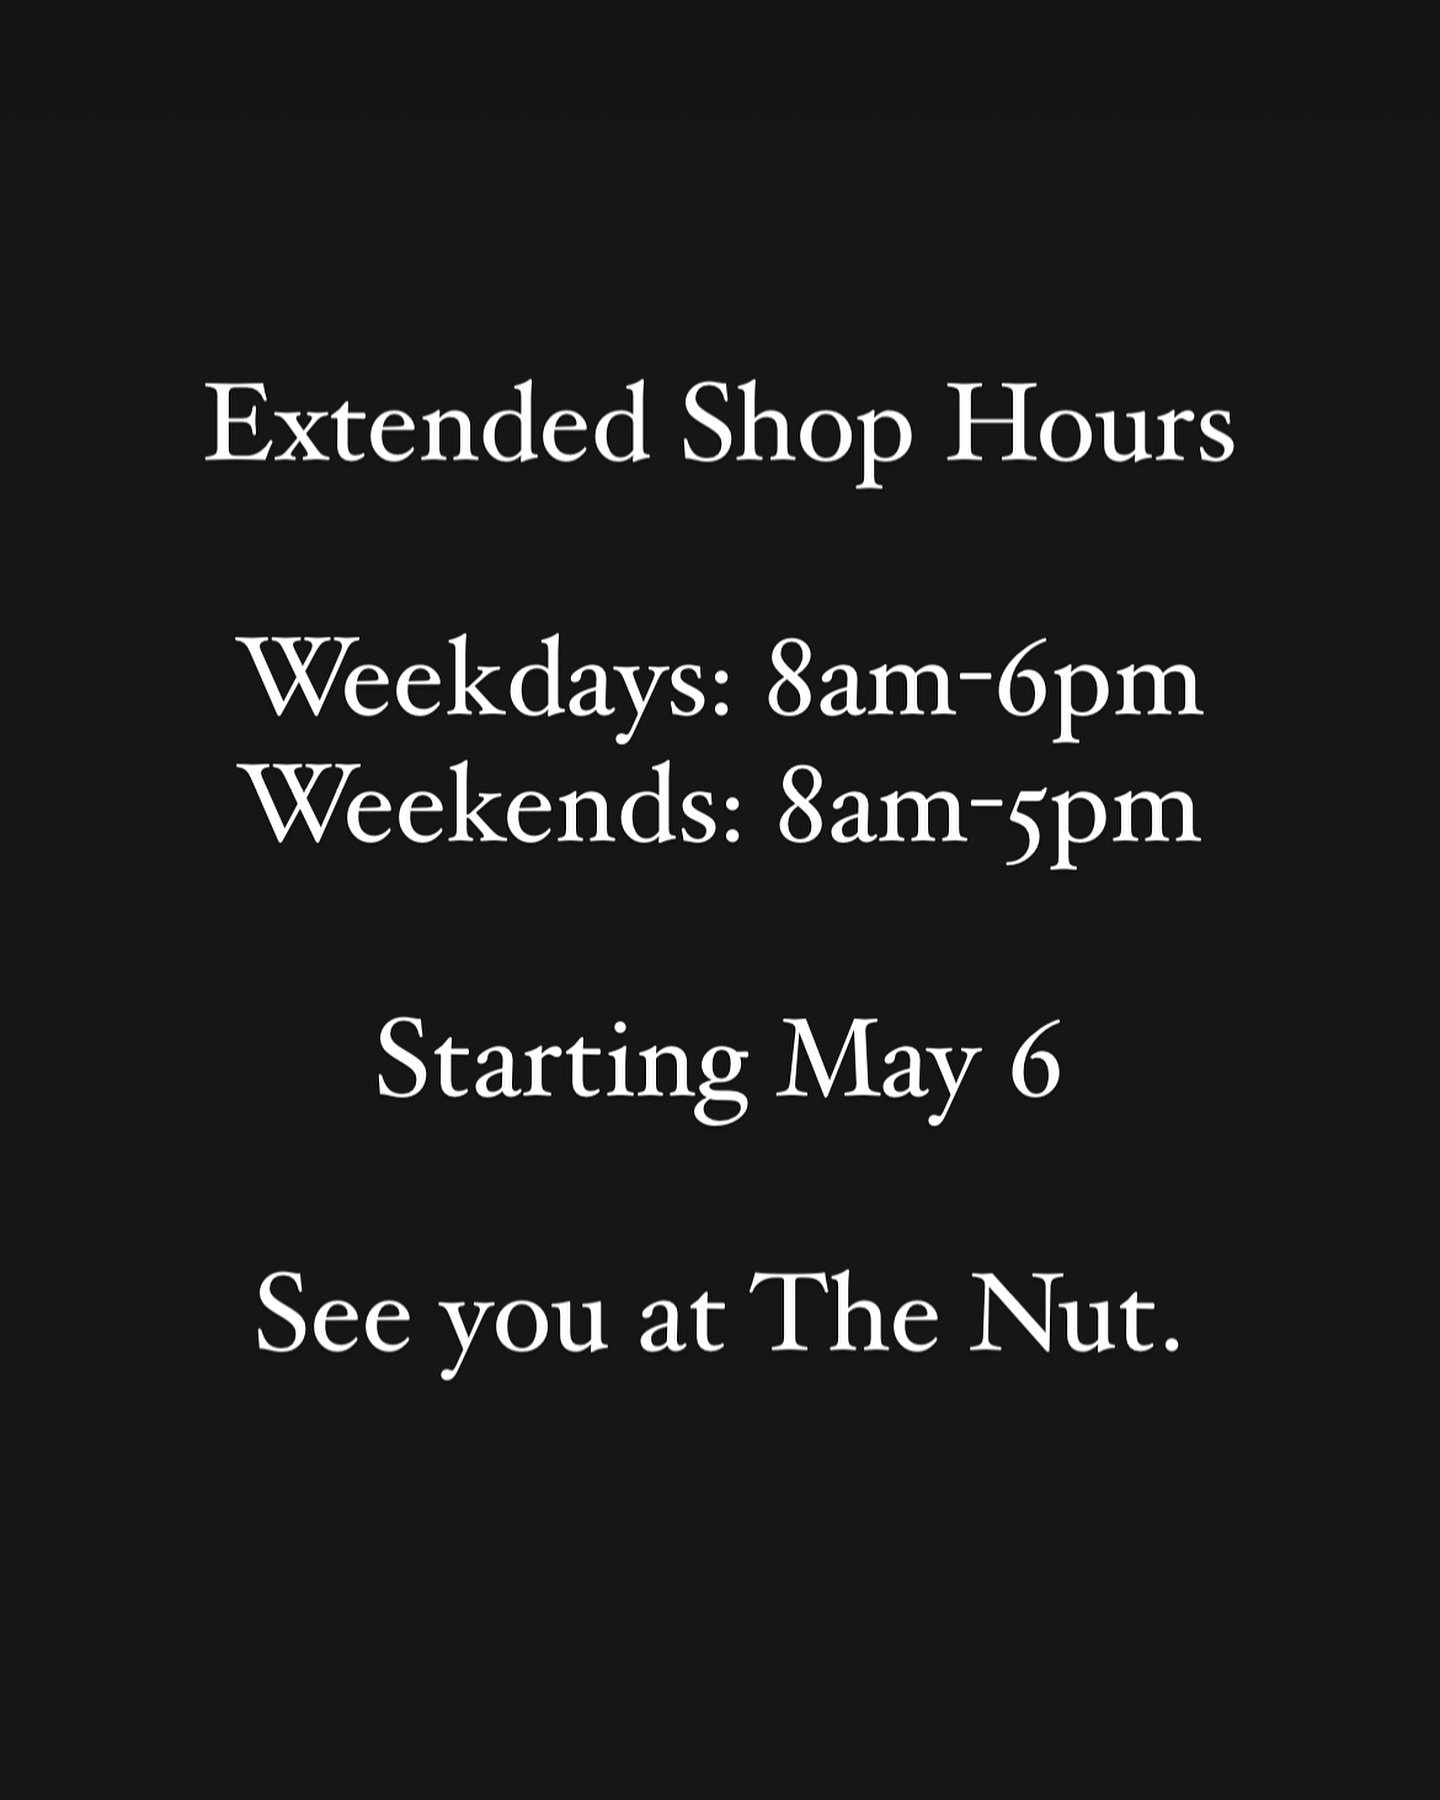 Starting Monday, May 6, we will be open longer hours both weekdays and weekends. Excited to see more of YOU at The Nut. 

#wheregoodthingsgrow #thenutca #mapleridge #mapleridgebc #mapleridgesmallbusiness #bc #bcbusiness #shopmapleridge #coffeeshop #y